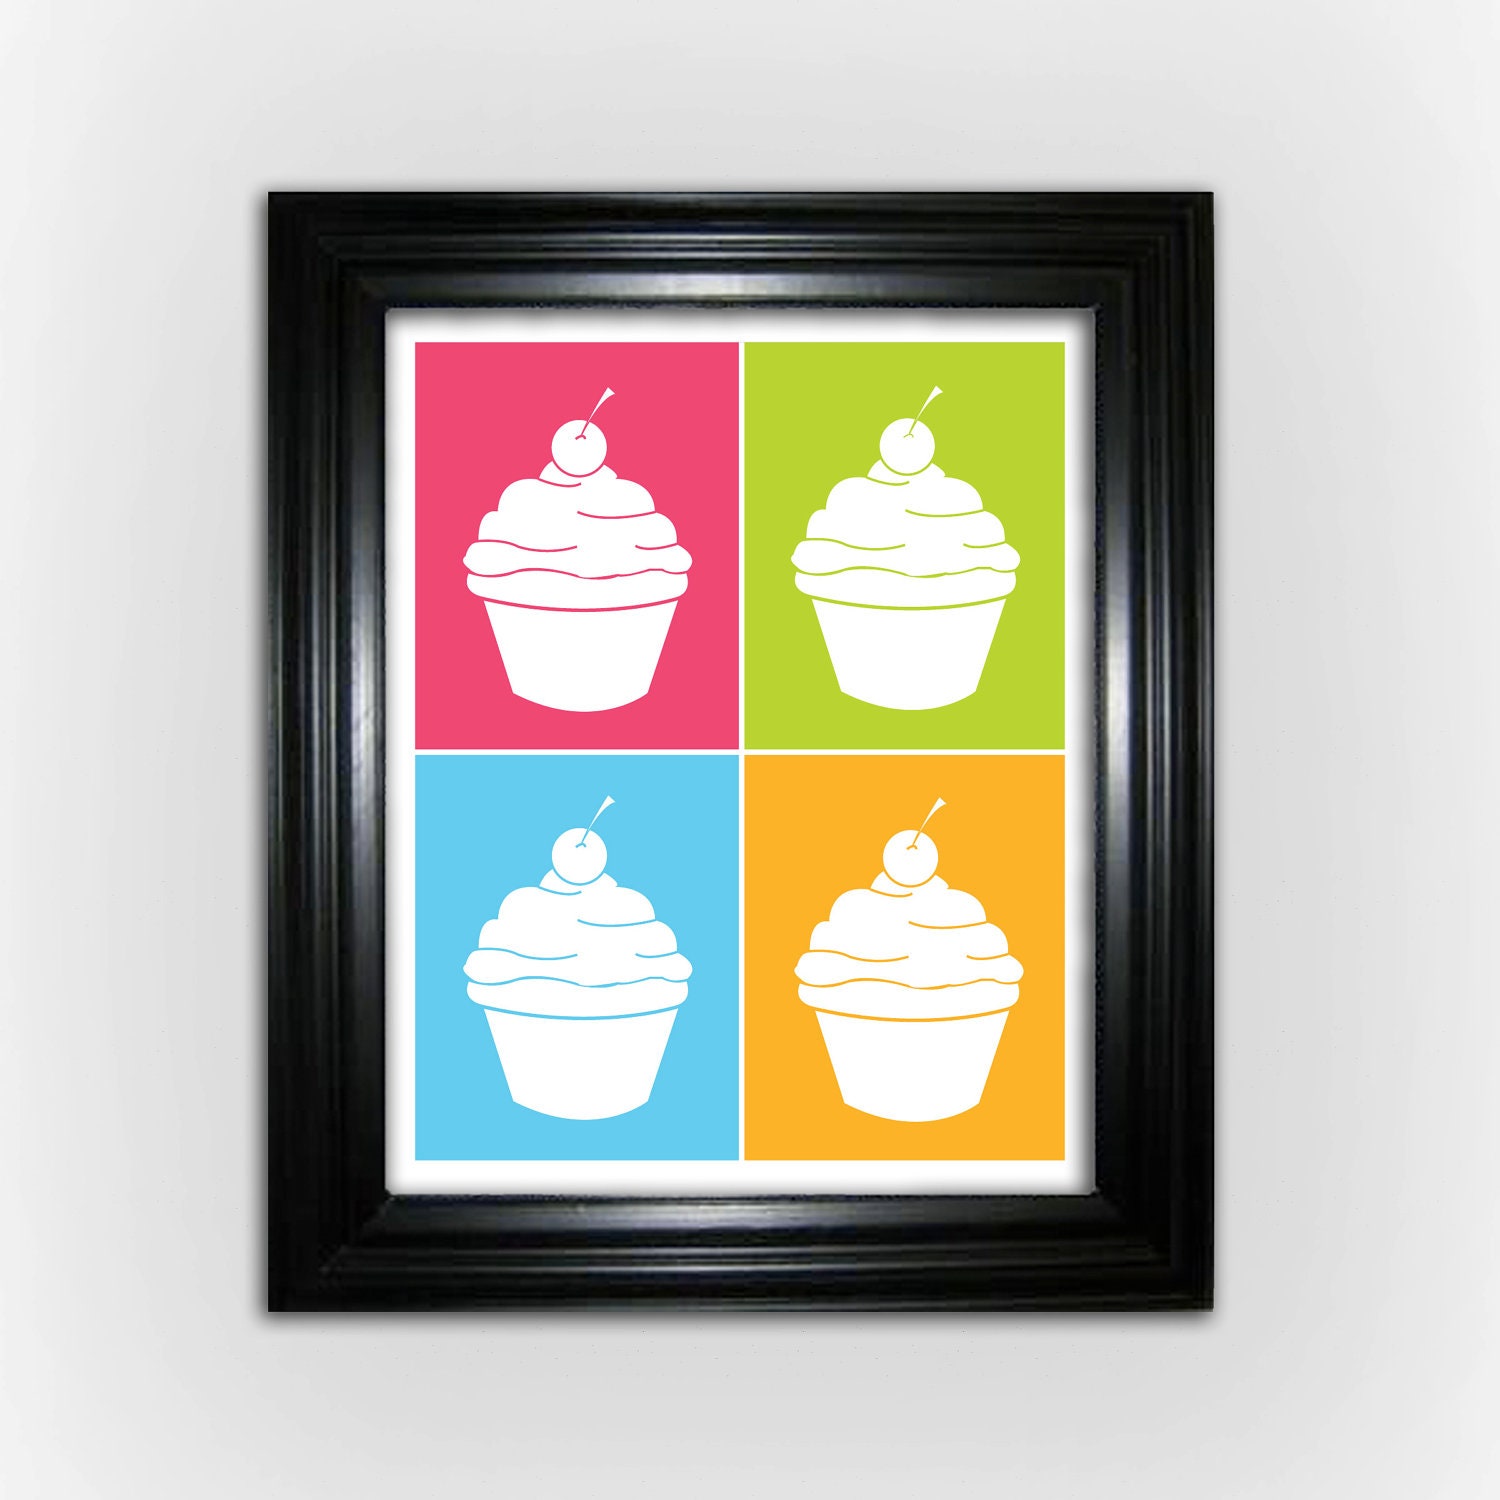 Cupcake Digital Print - Cupcake Collage - Printable Art